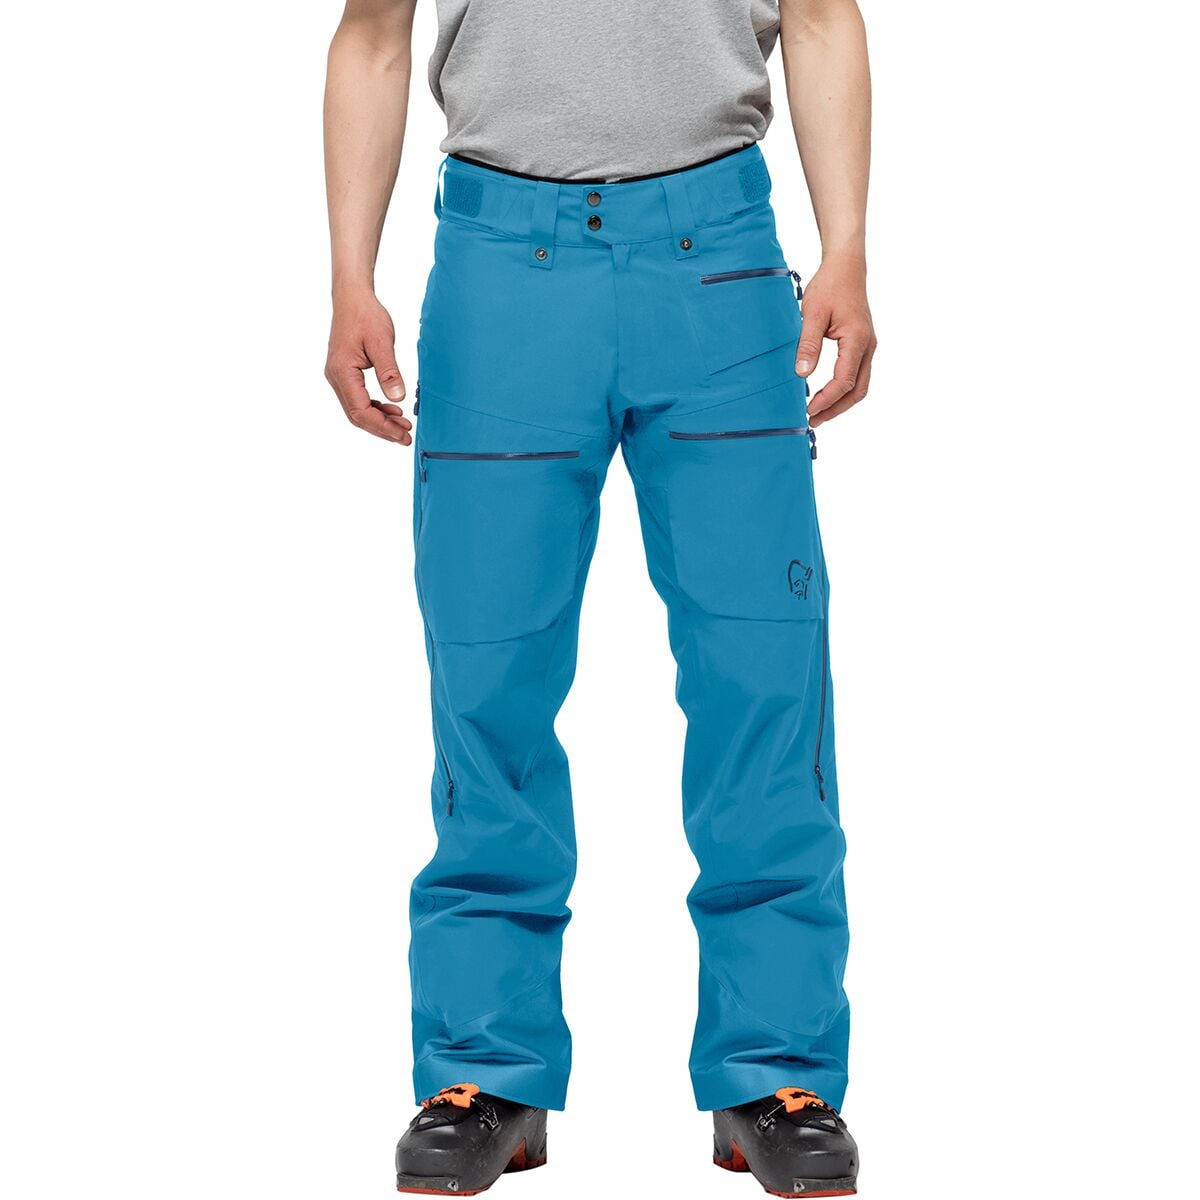 Lofoten GORE-TEX Insulated Pant - Men